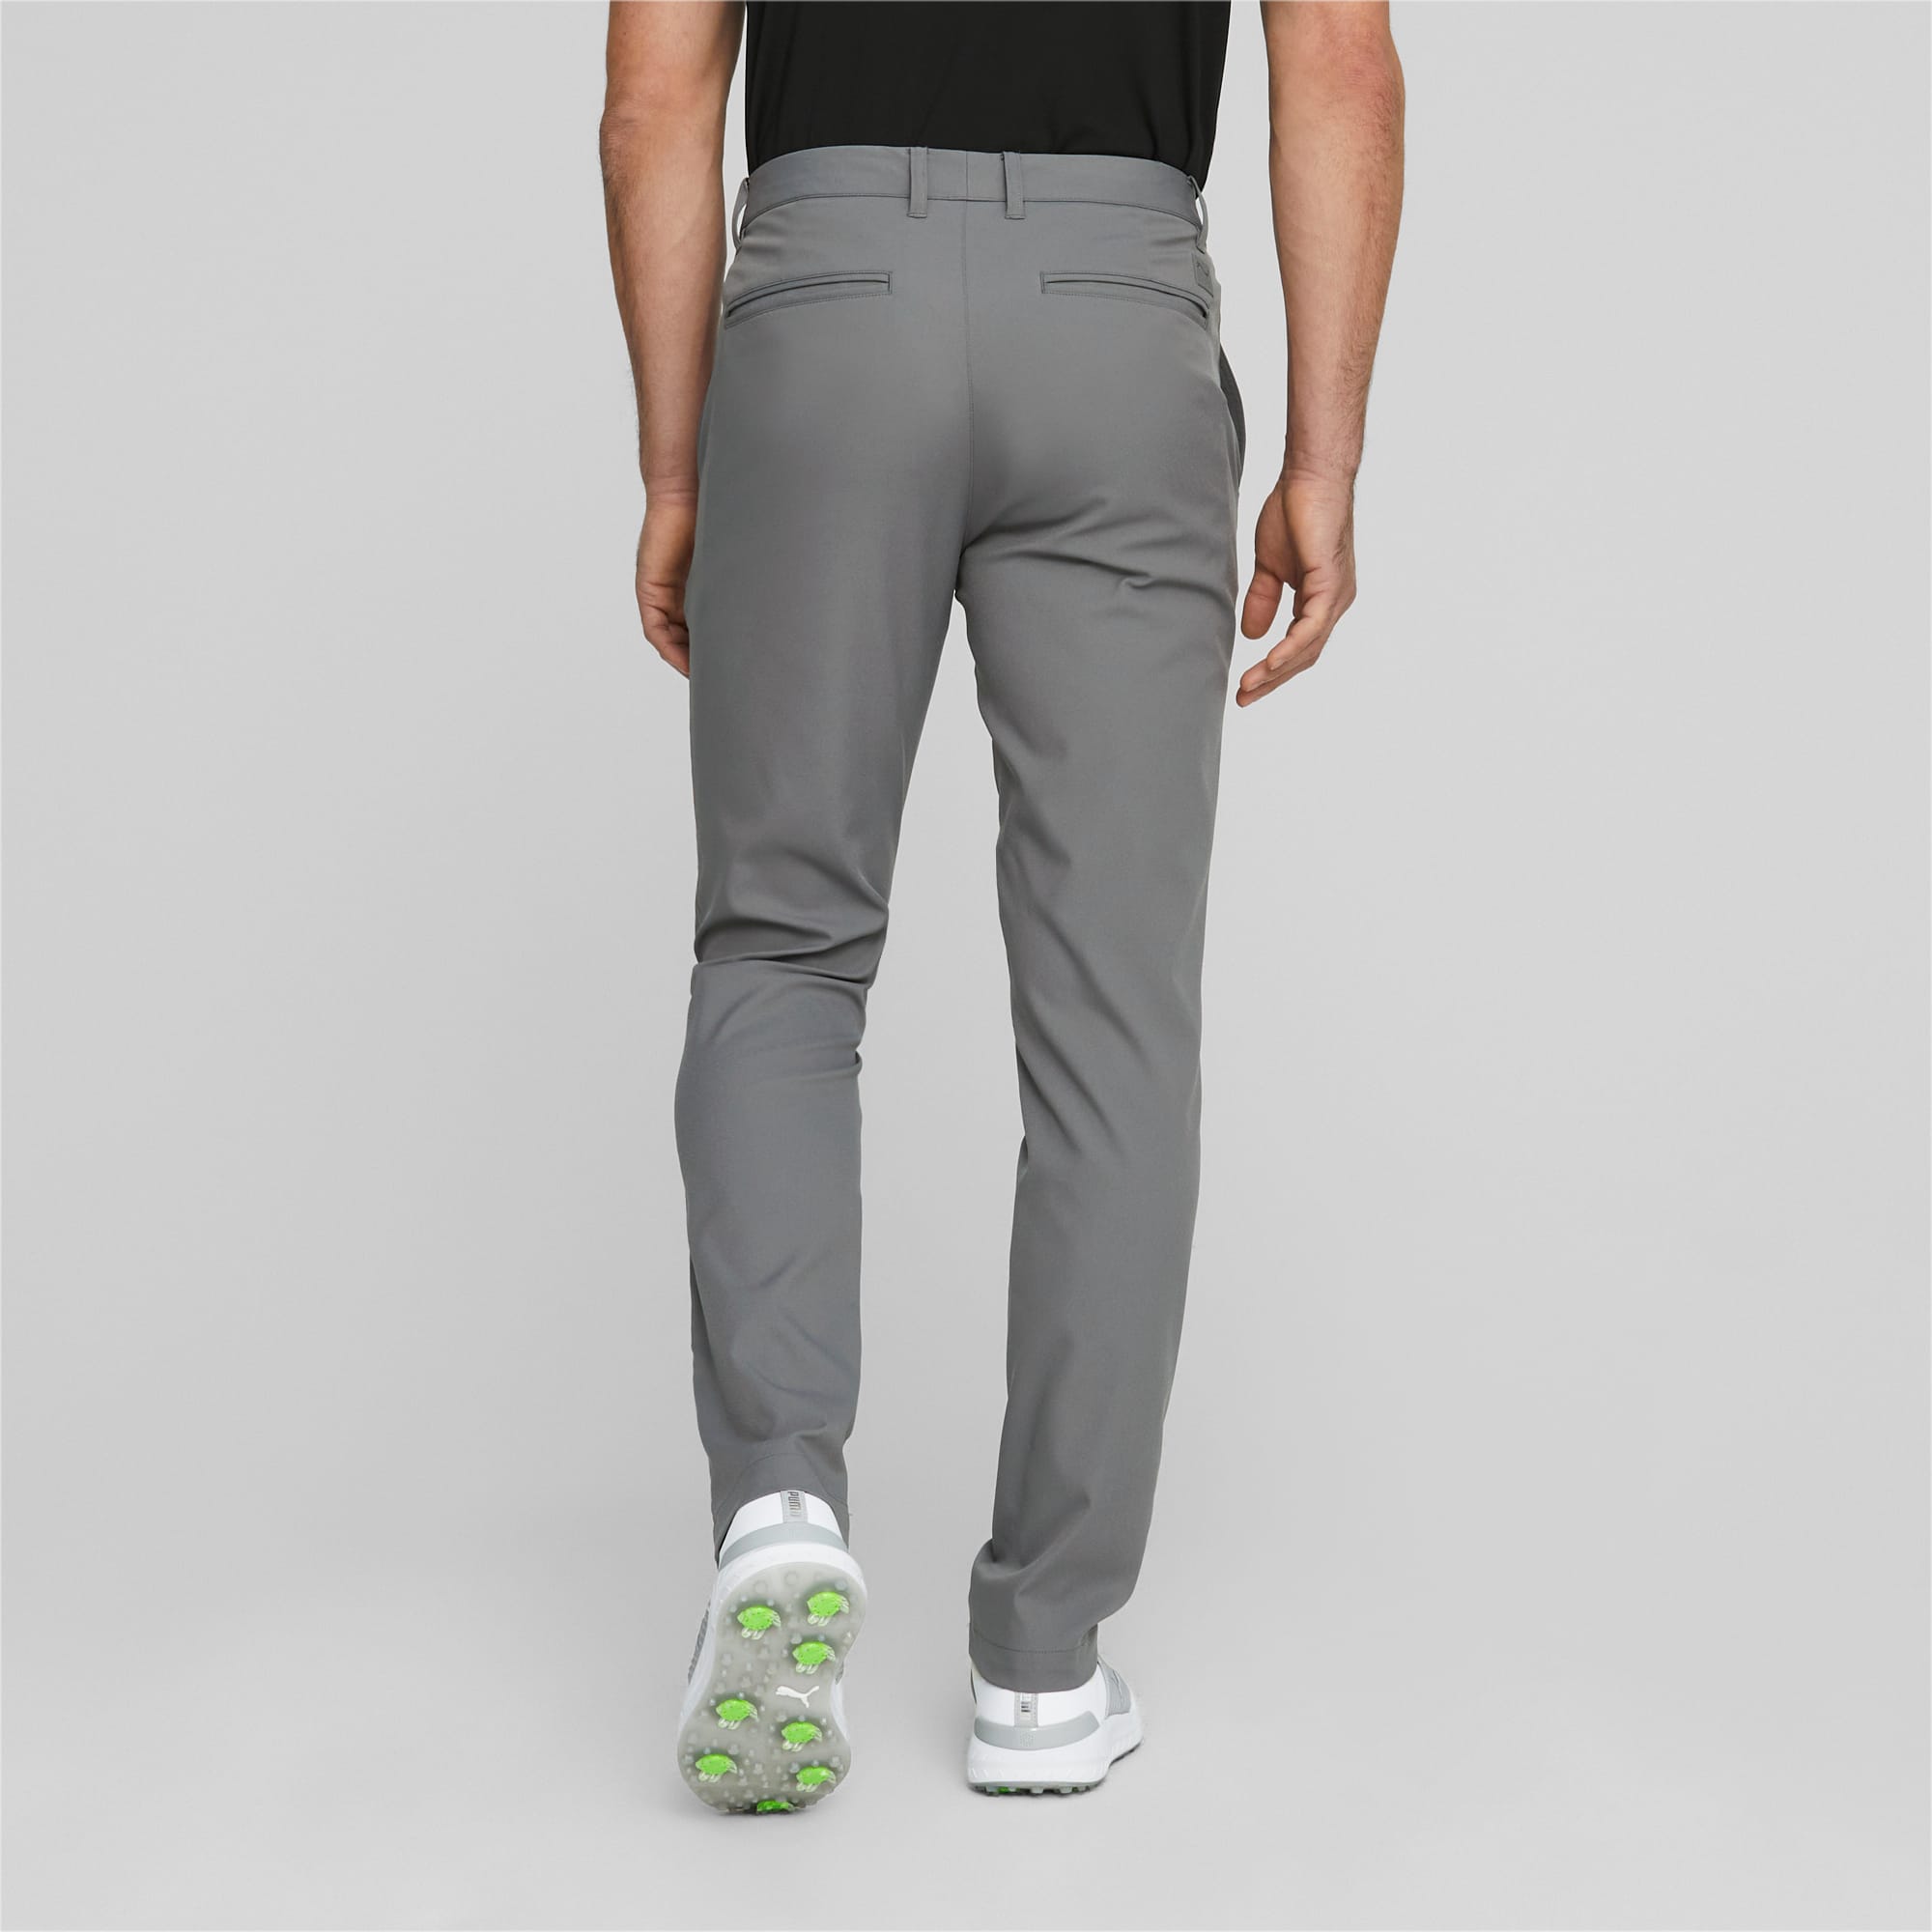 PUMA Dealer Tailored Golf Pants Men, Slate Sky